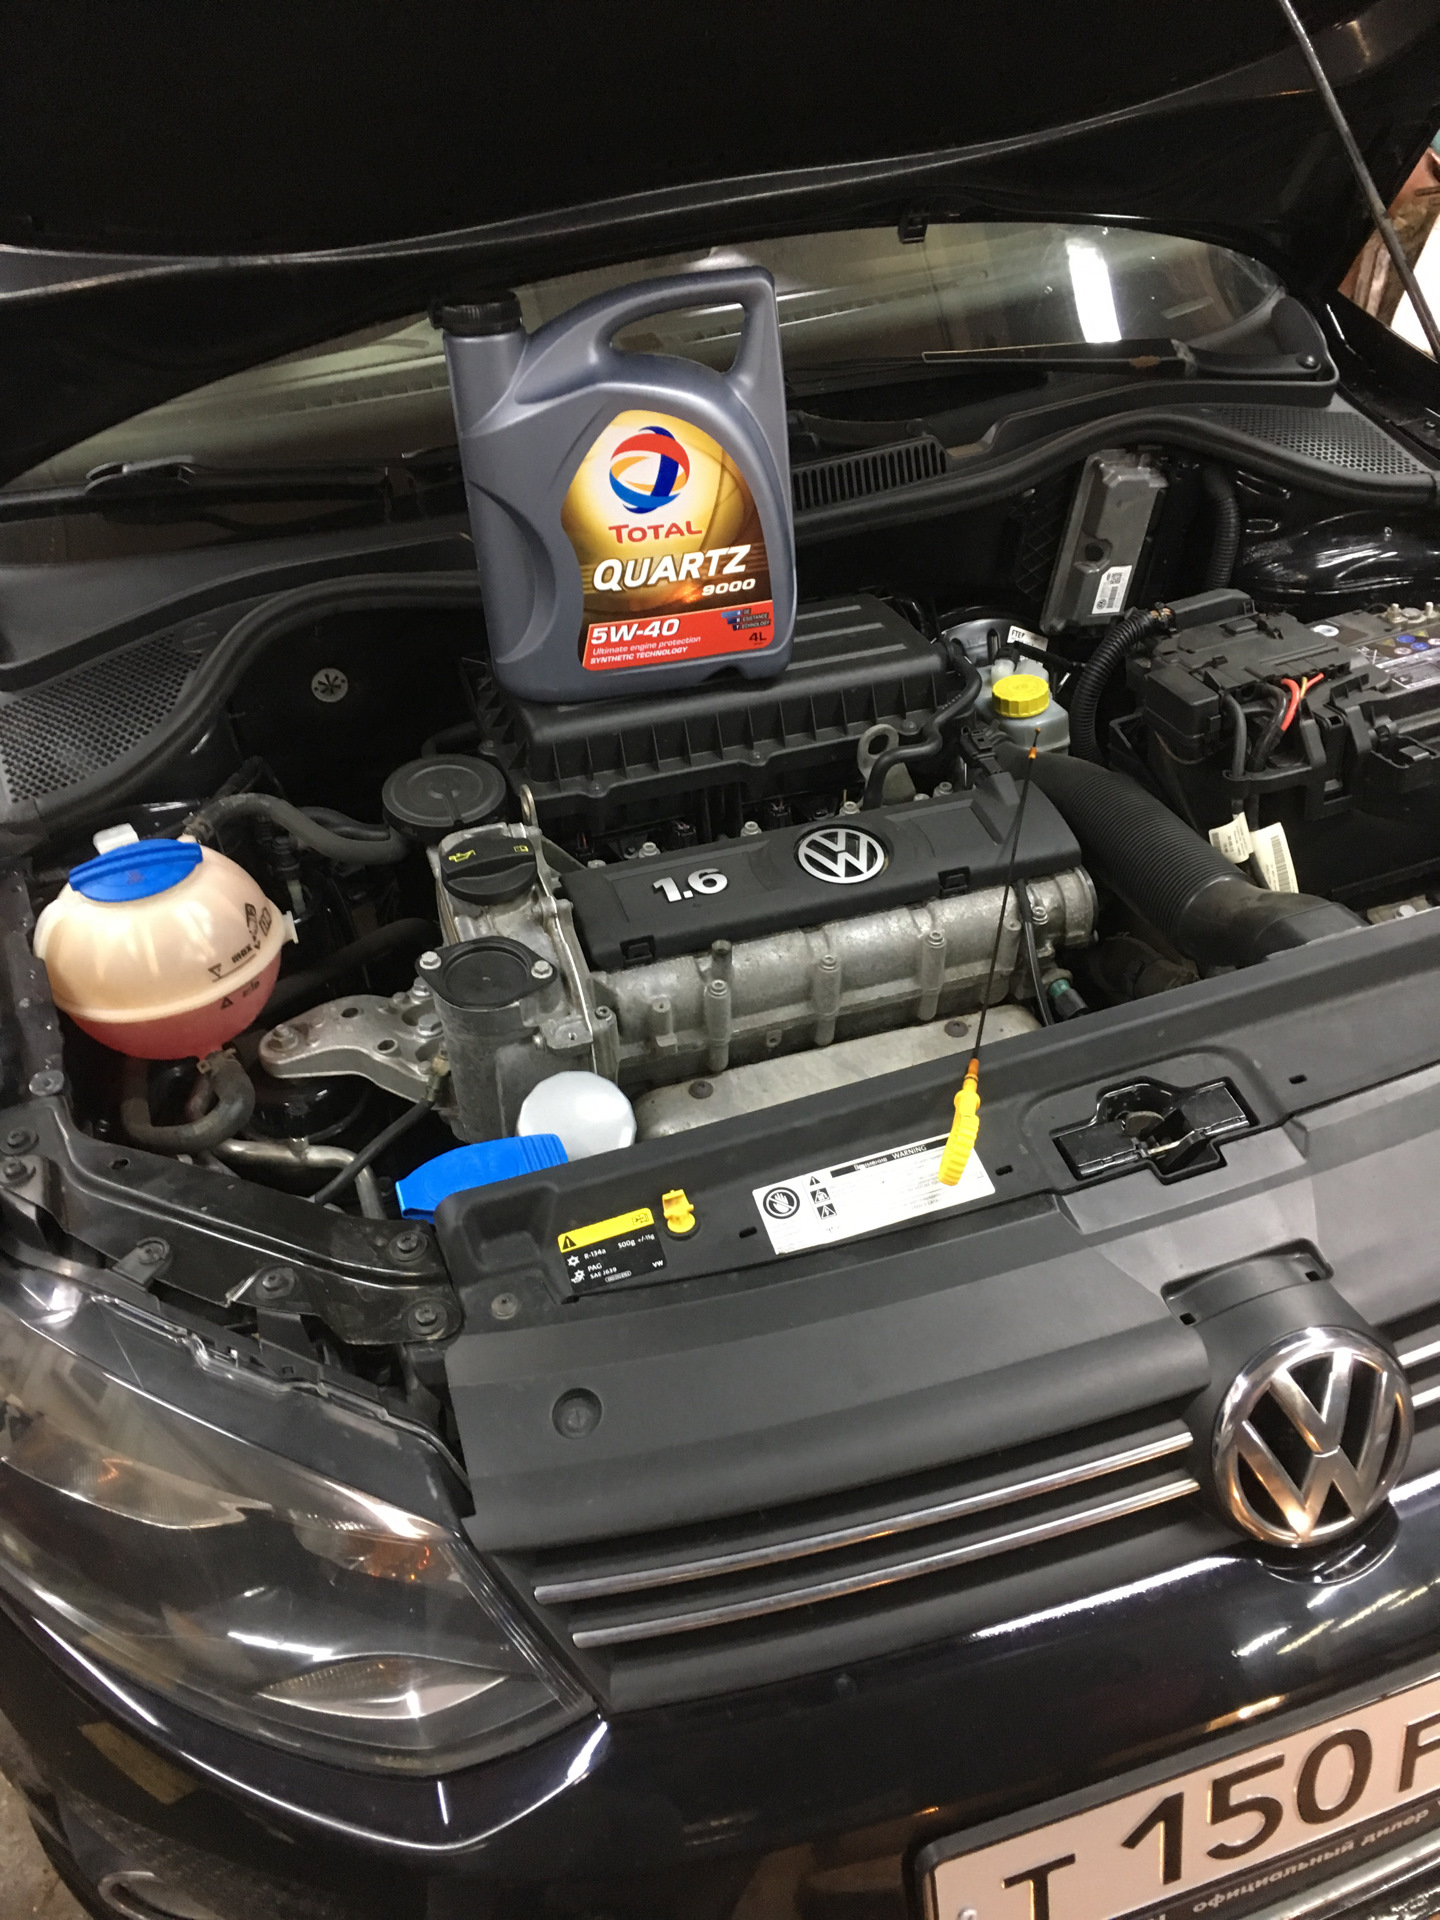 Volkswagen polo замена масла. Двигатель Фольксваген поло седан 1.6. Замена масла на Фольксваген поло 1.6. Фольксваген поло двигатель 1.6 105. Масло моторное для Фольксваген поло седан 1.6.